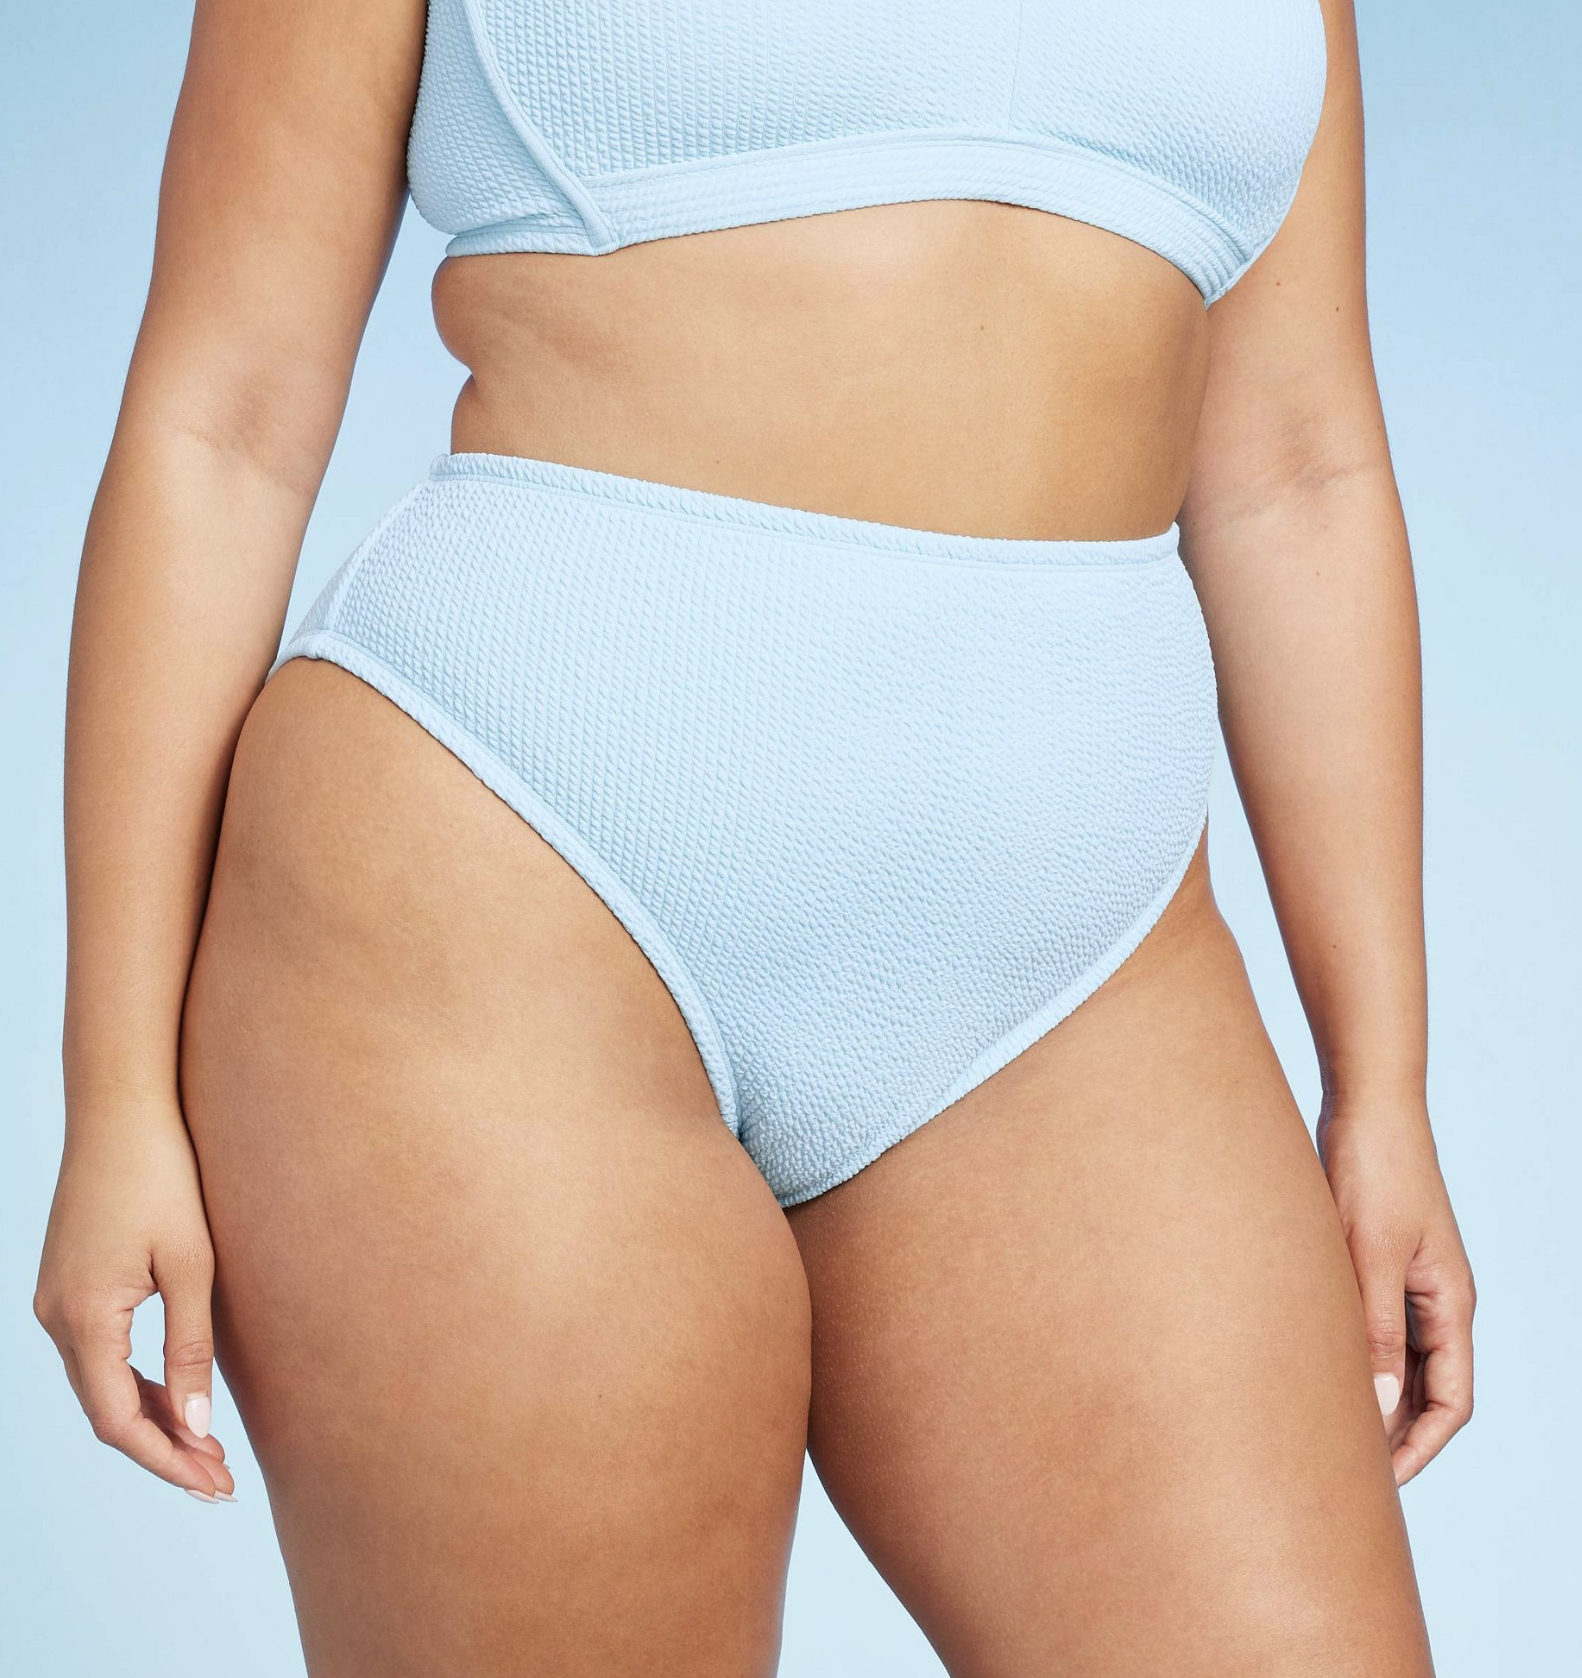 model wearing light blue mid-rise bikini bottom